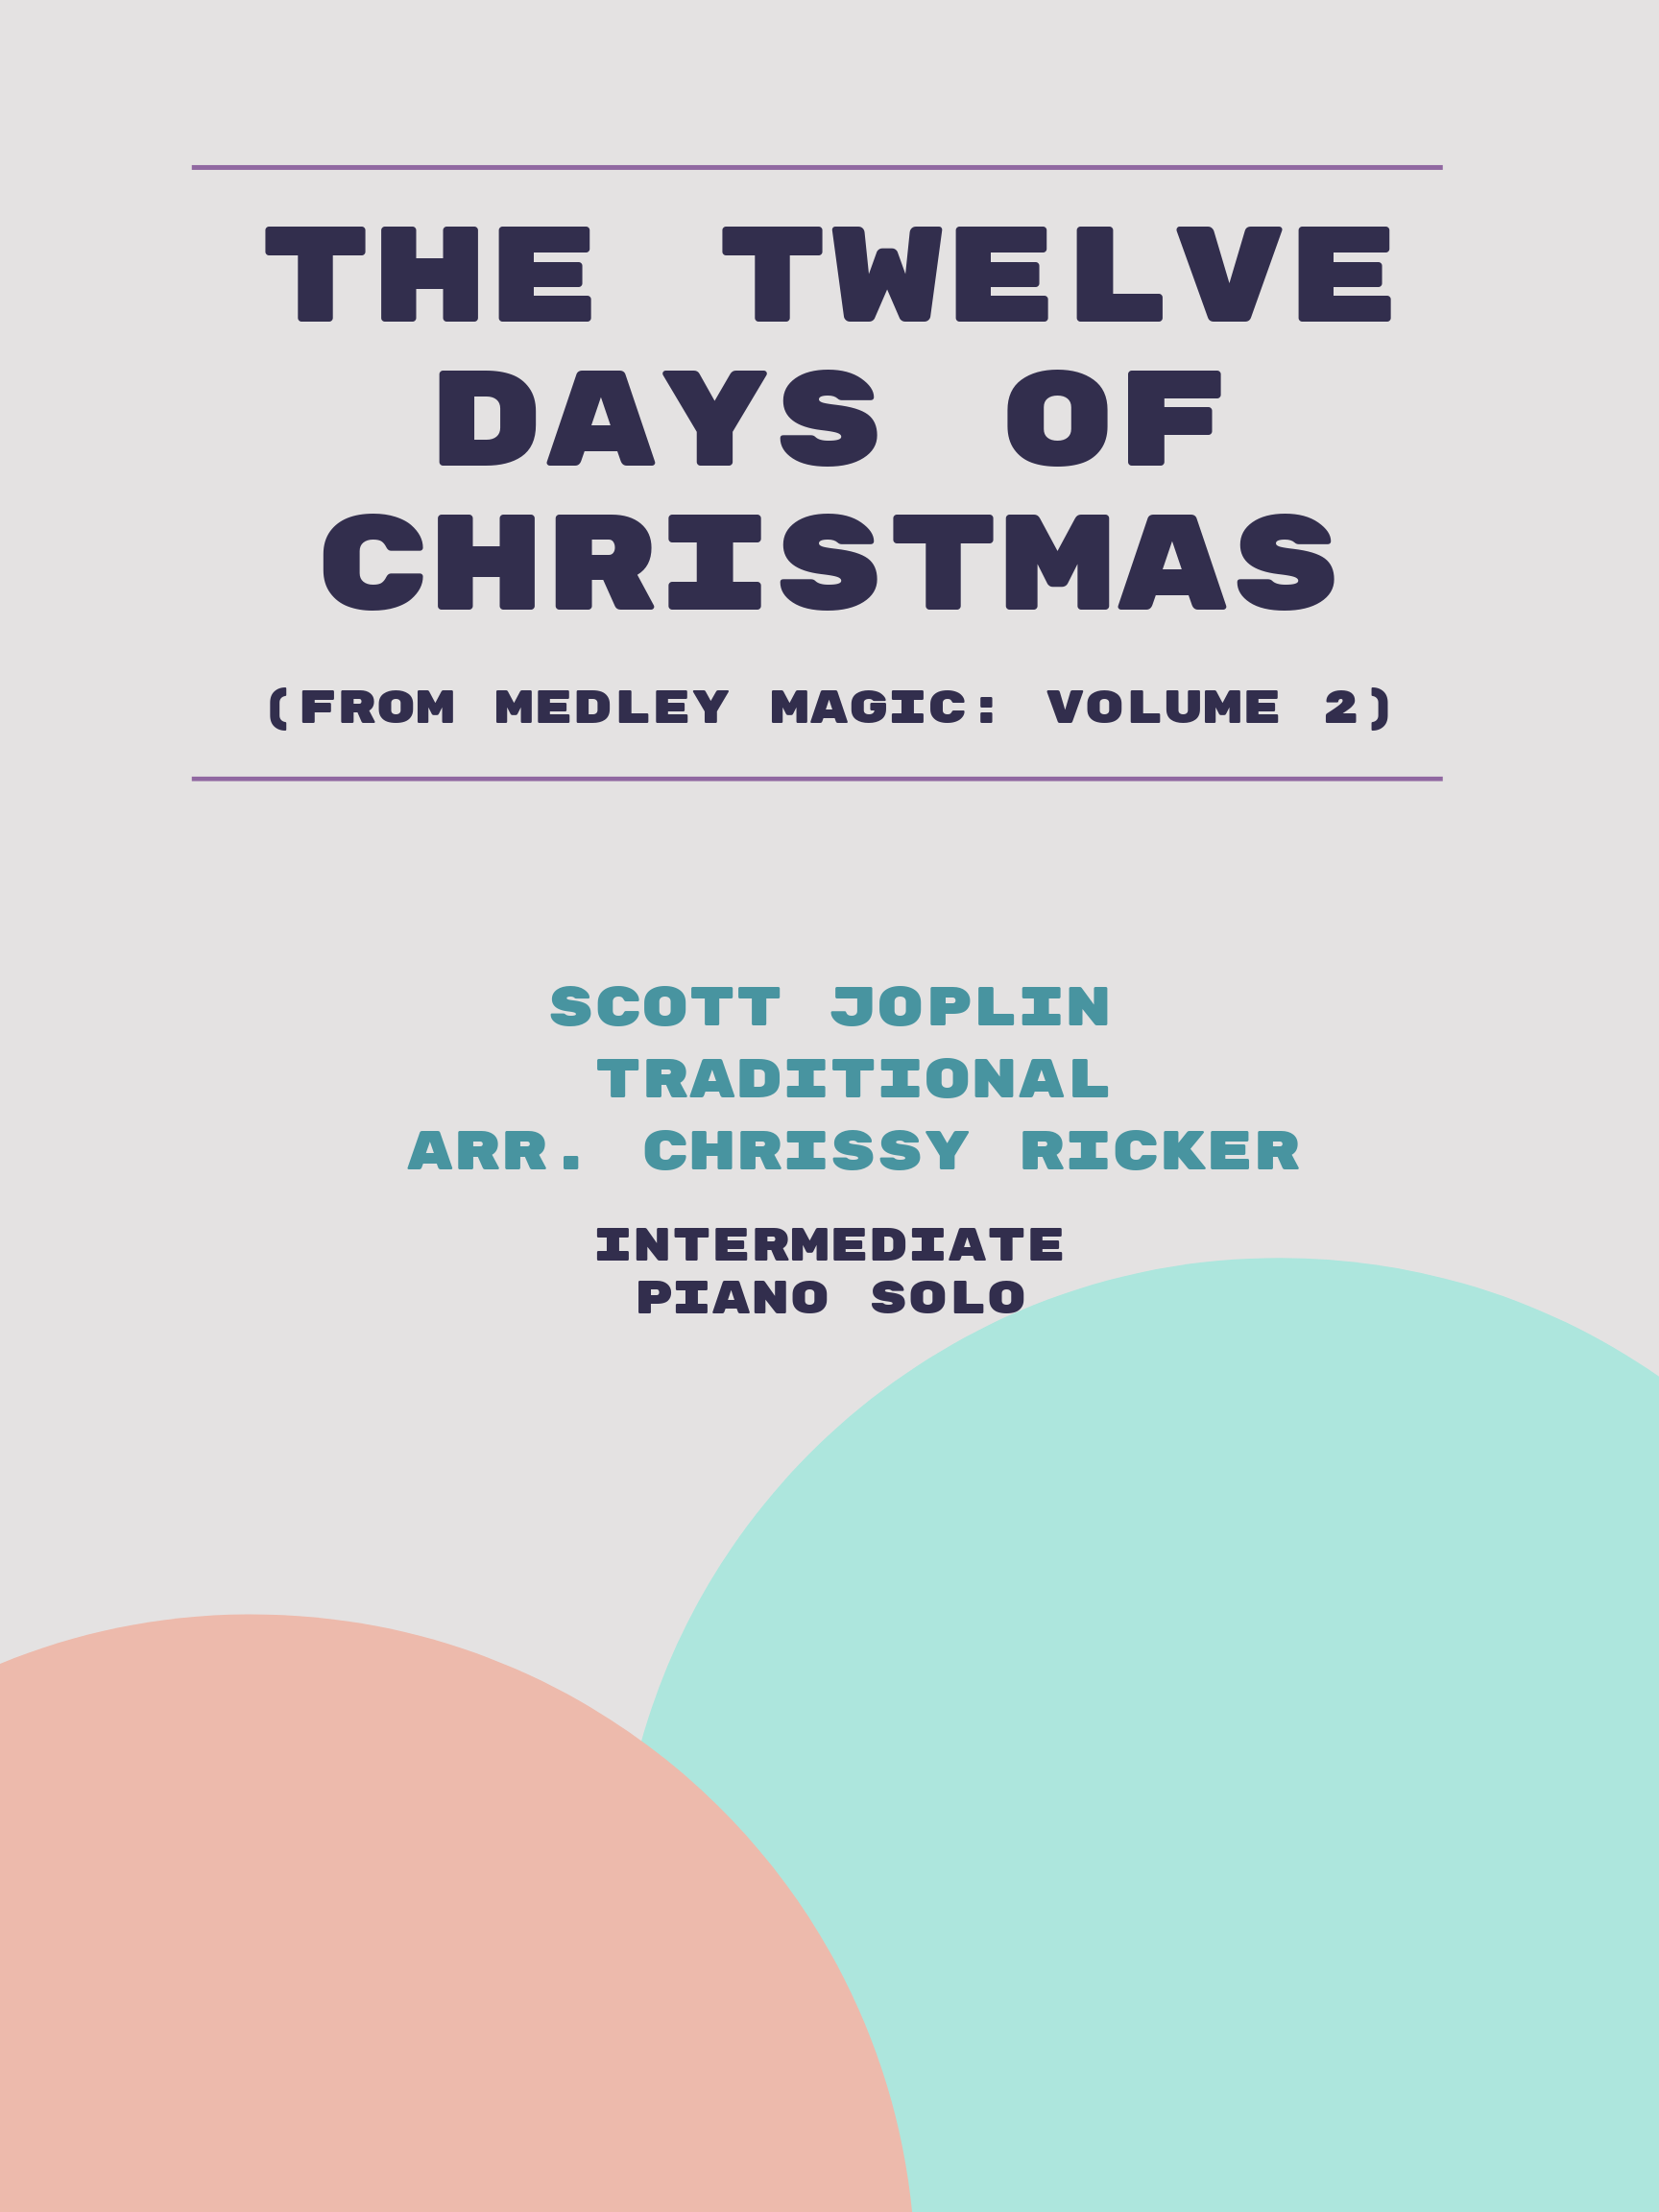 The Twelve Days of Christmas by Scott Joplin, Traditional